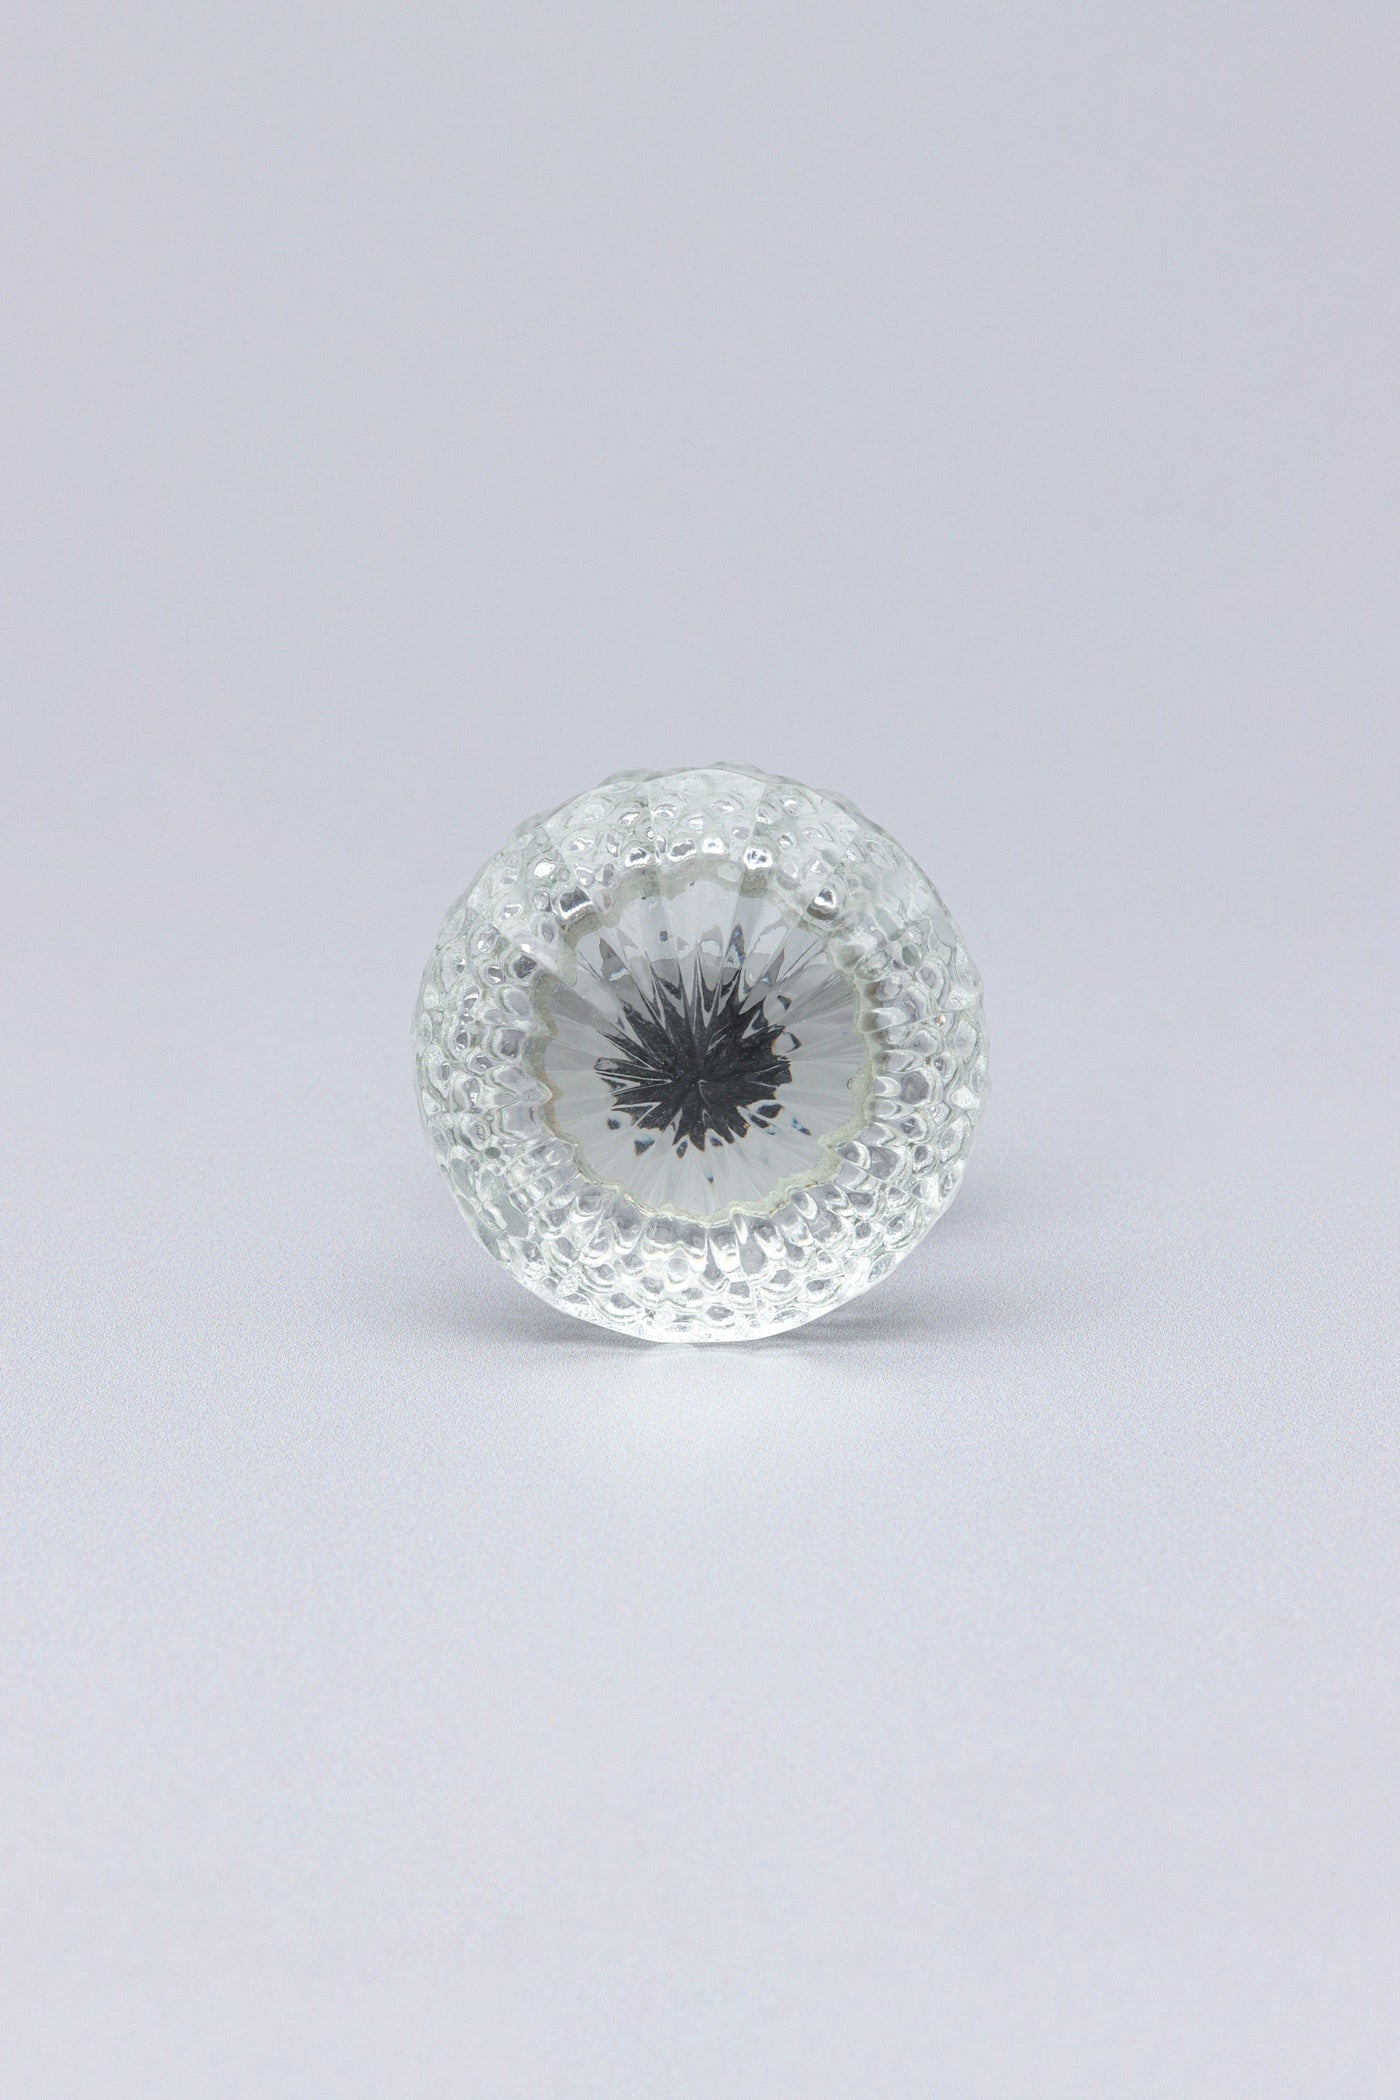 Gdecorstore Door Knobs & Handles Clear Harrison Crystal Glass Flower Swirl Pull Knobs